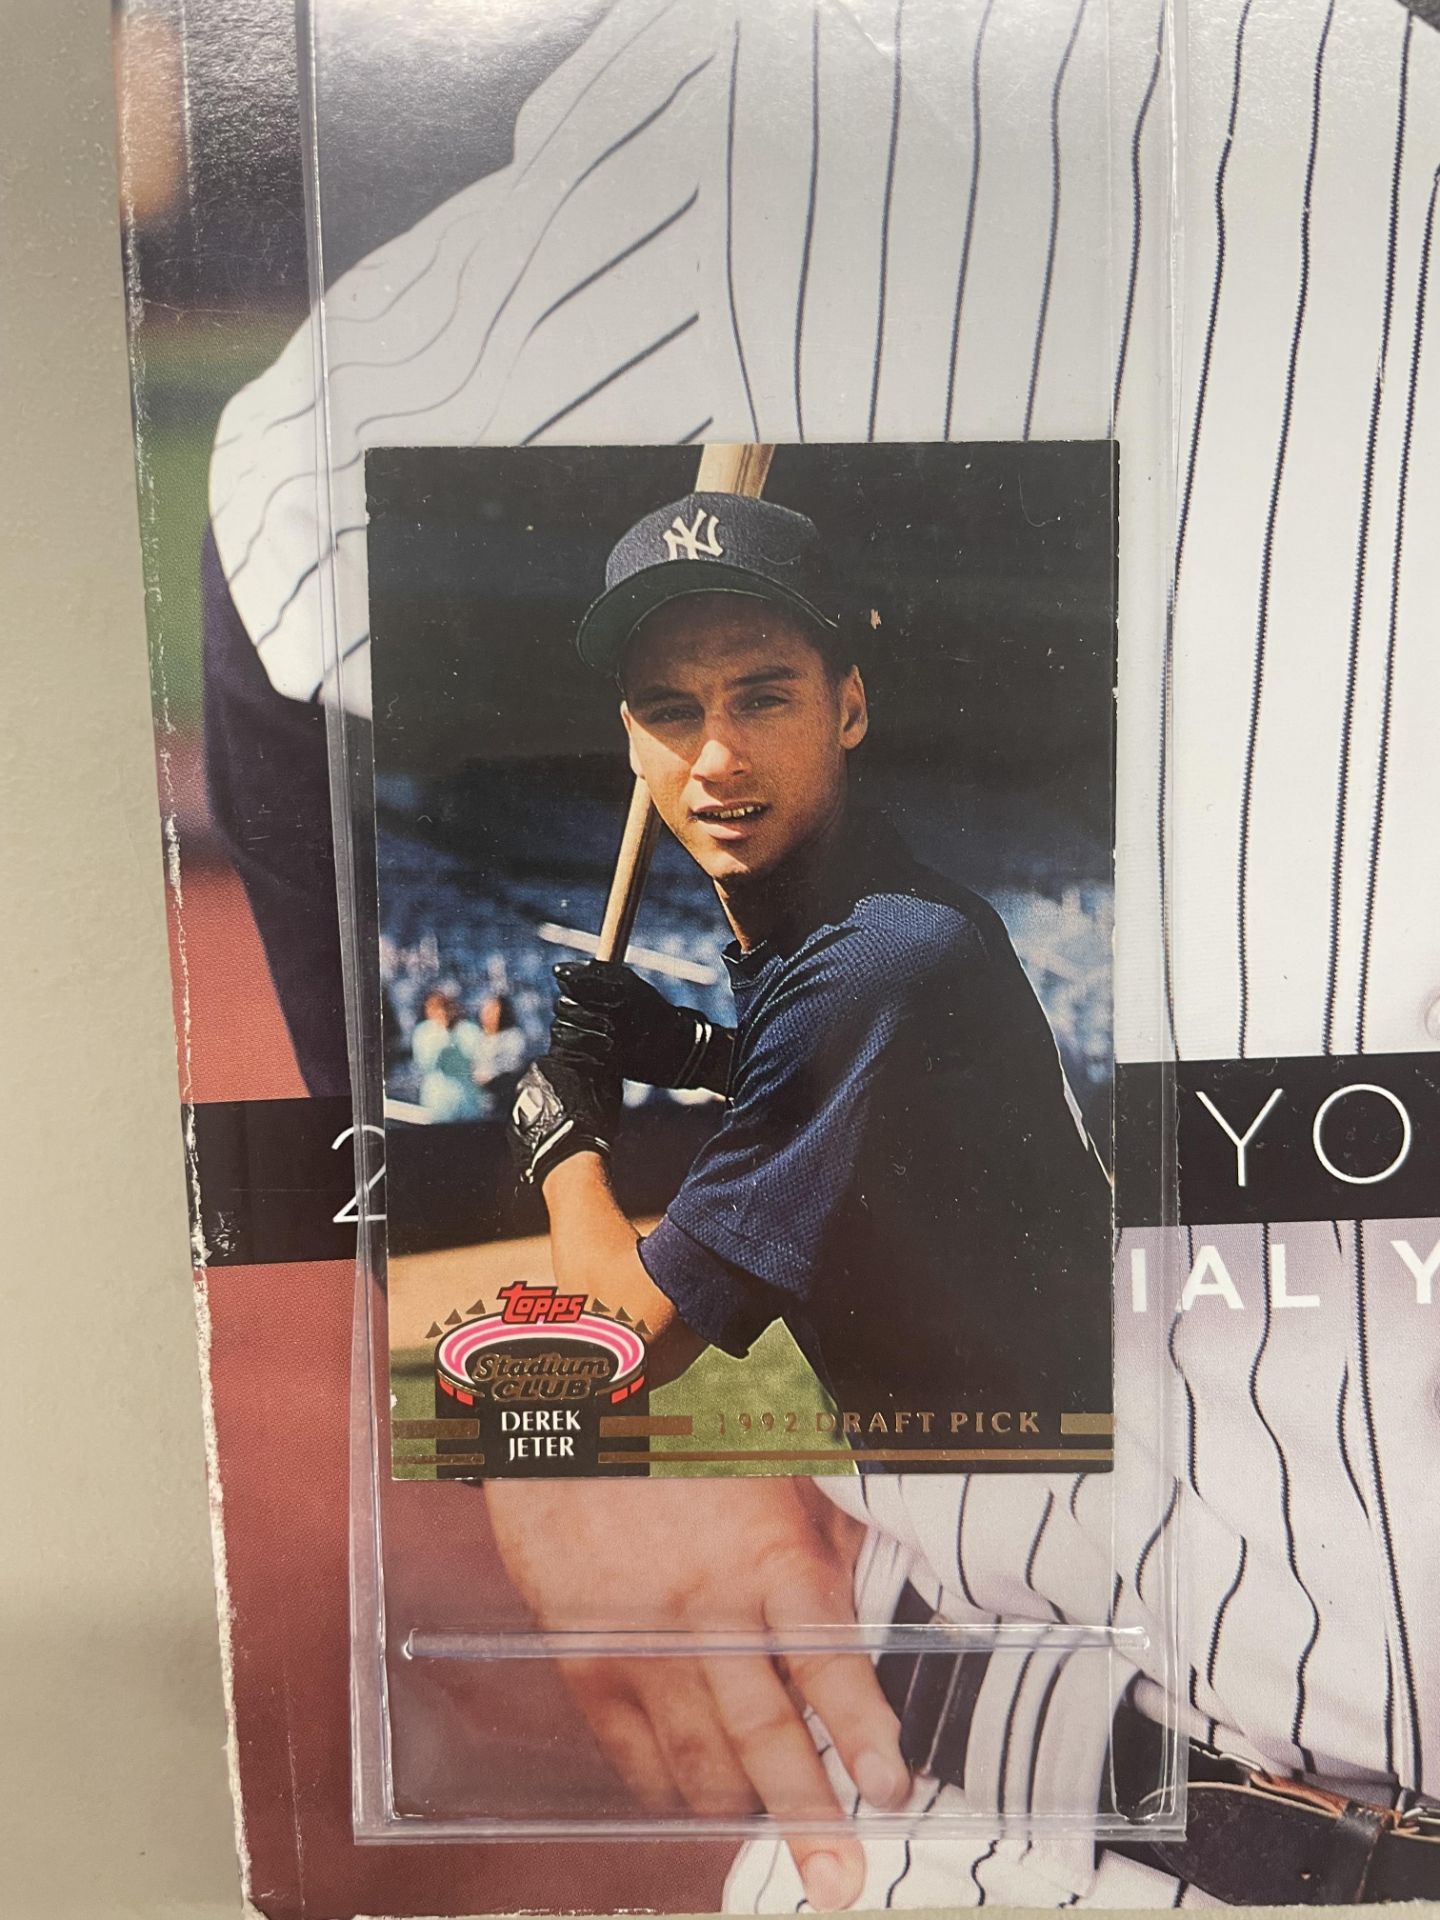 (Lot)Tops Stadium Club Derek Jeter 1992 Draft Pick Rookie Card w/Final Season of Jeter NY Yankee - Image 2 of 3